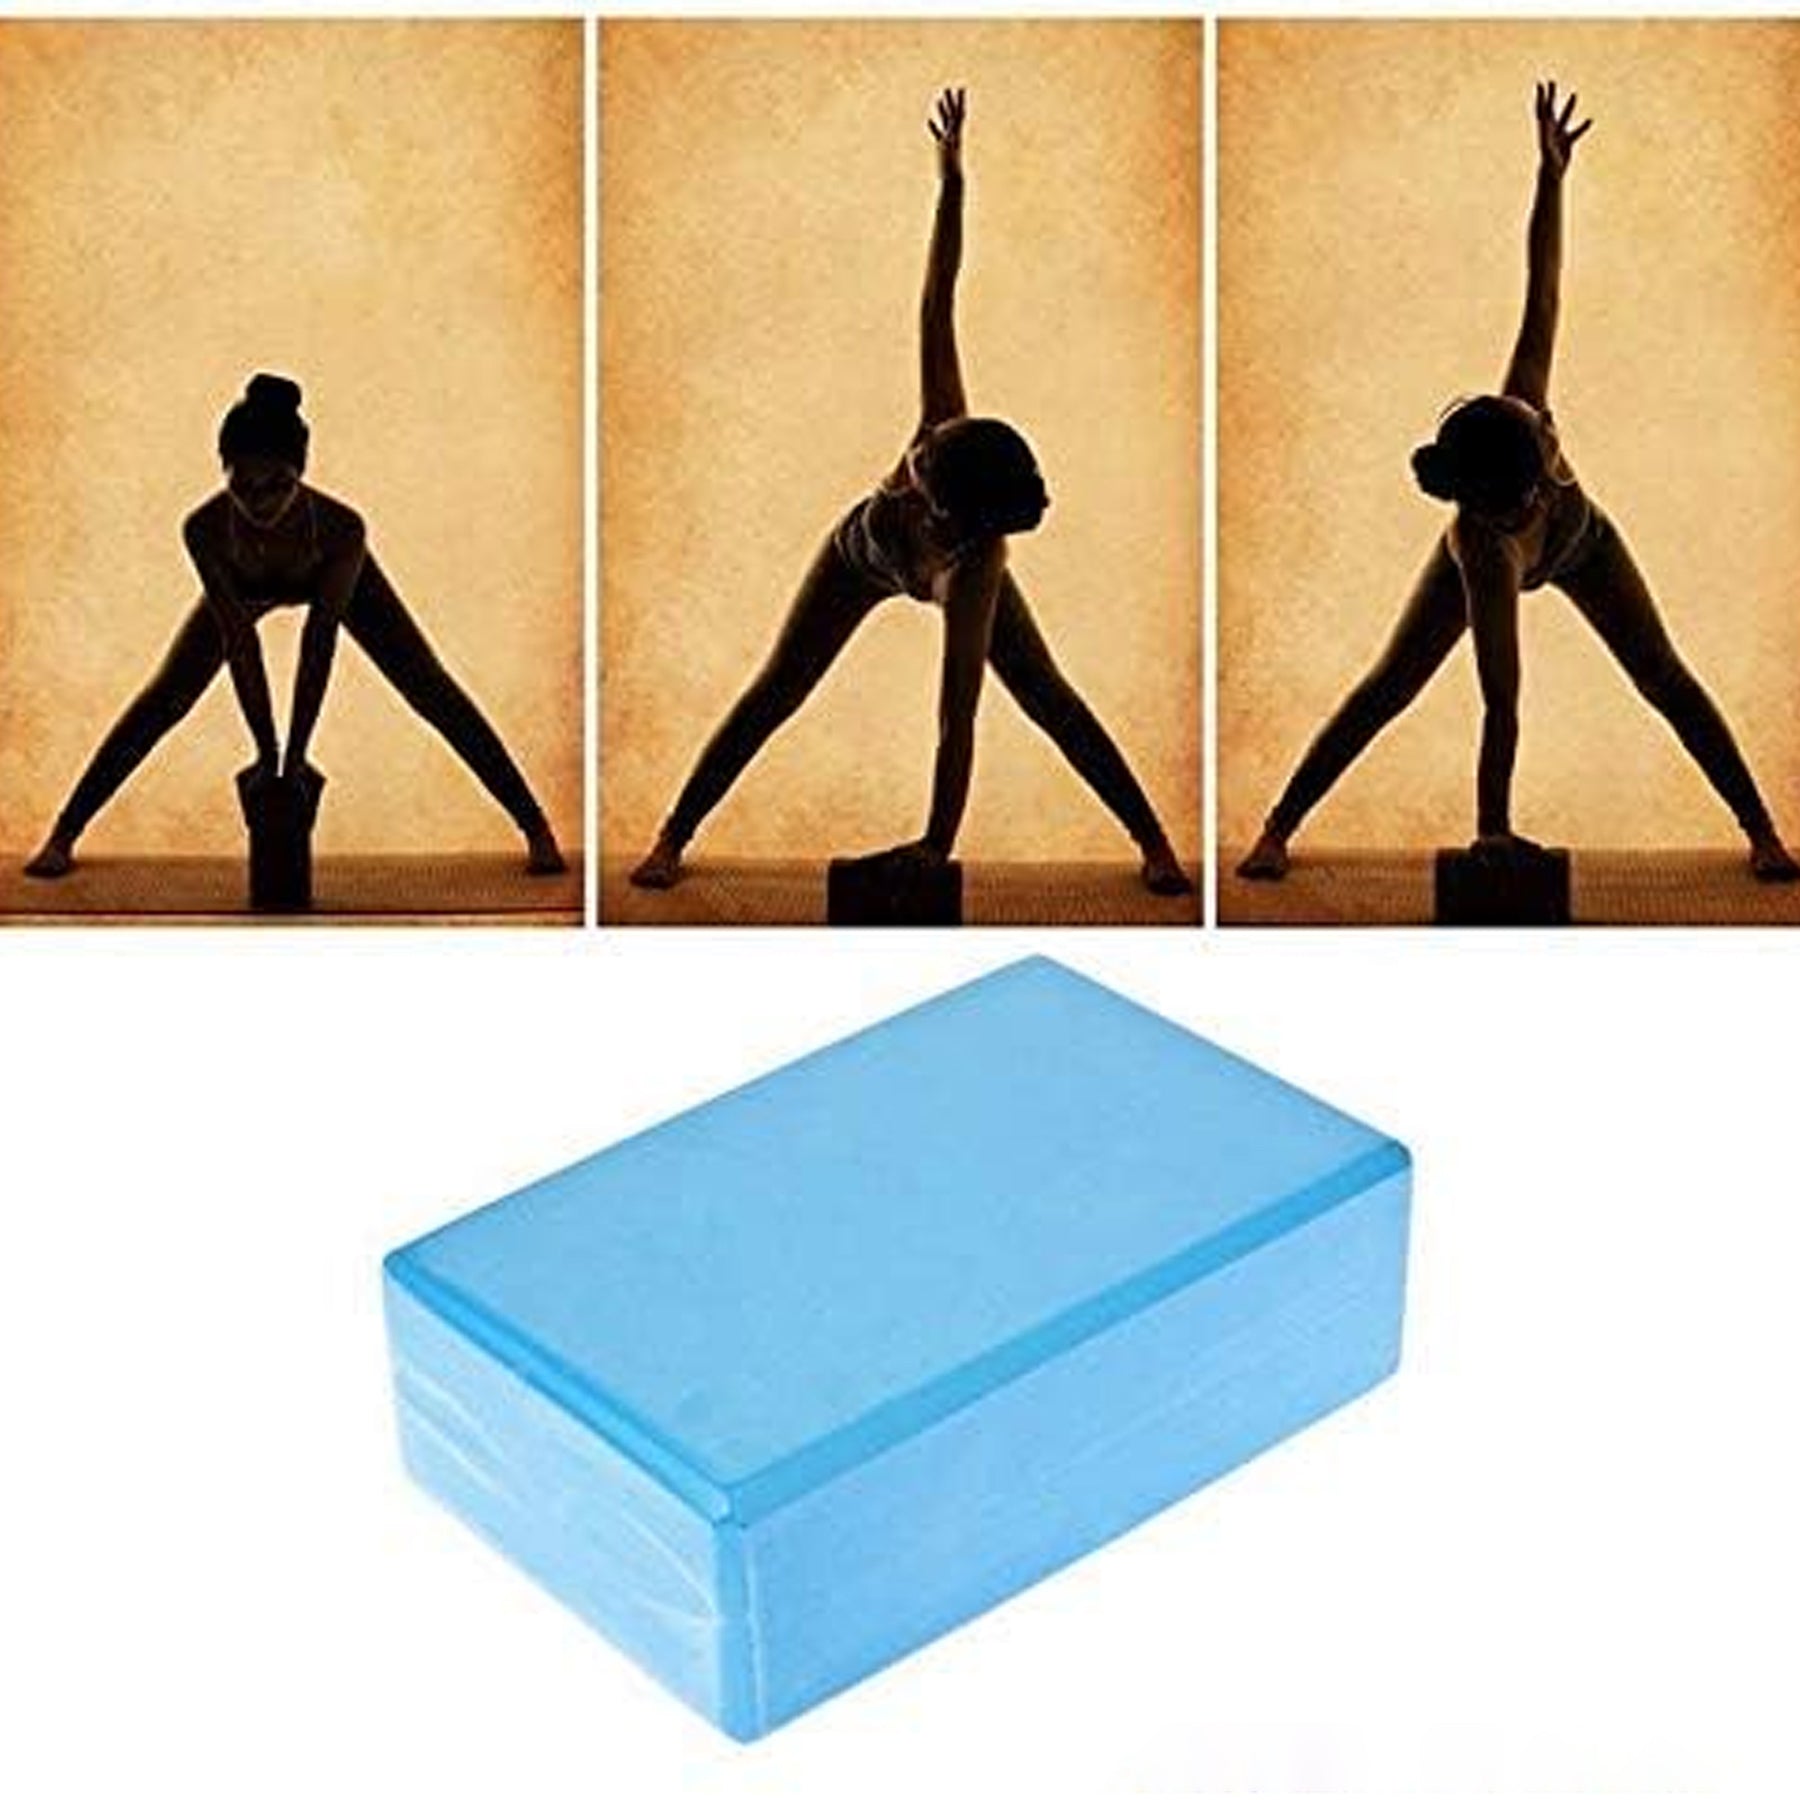 Yoga Brick High Density Premium EVA Foam Material, Odour Resistant, Soft Surface for balance, support & performance